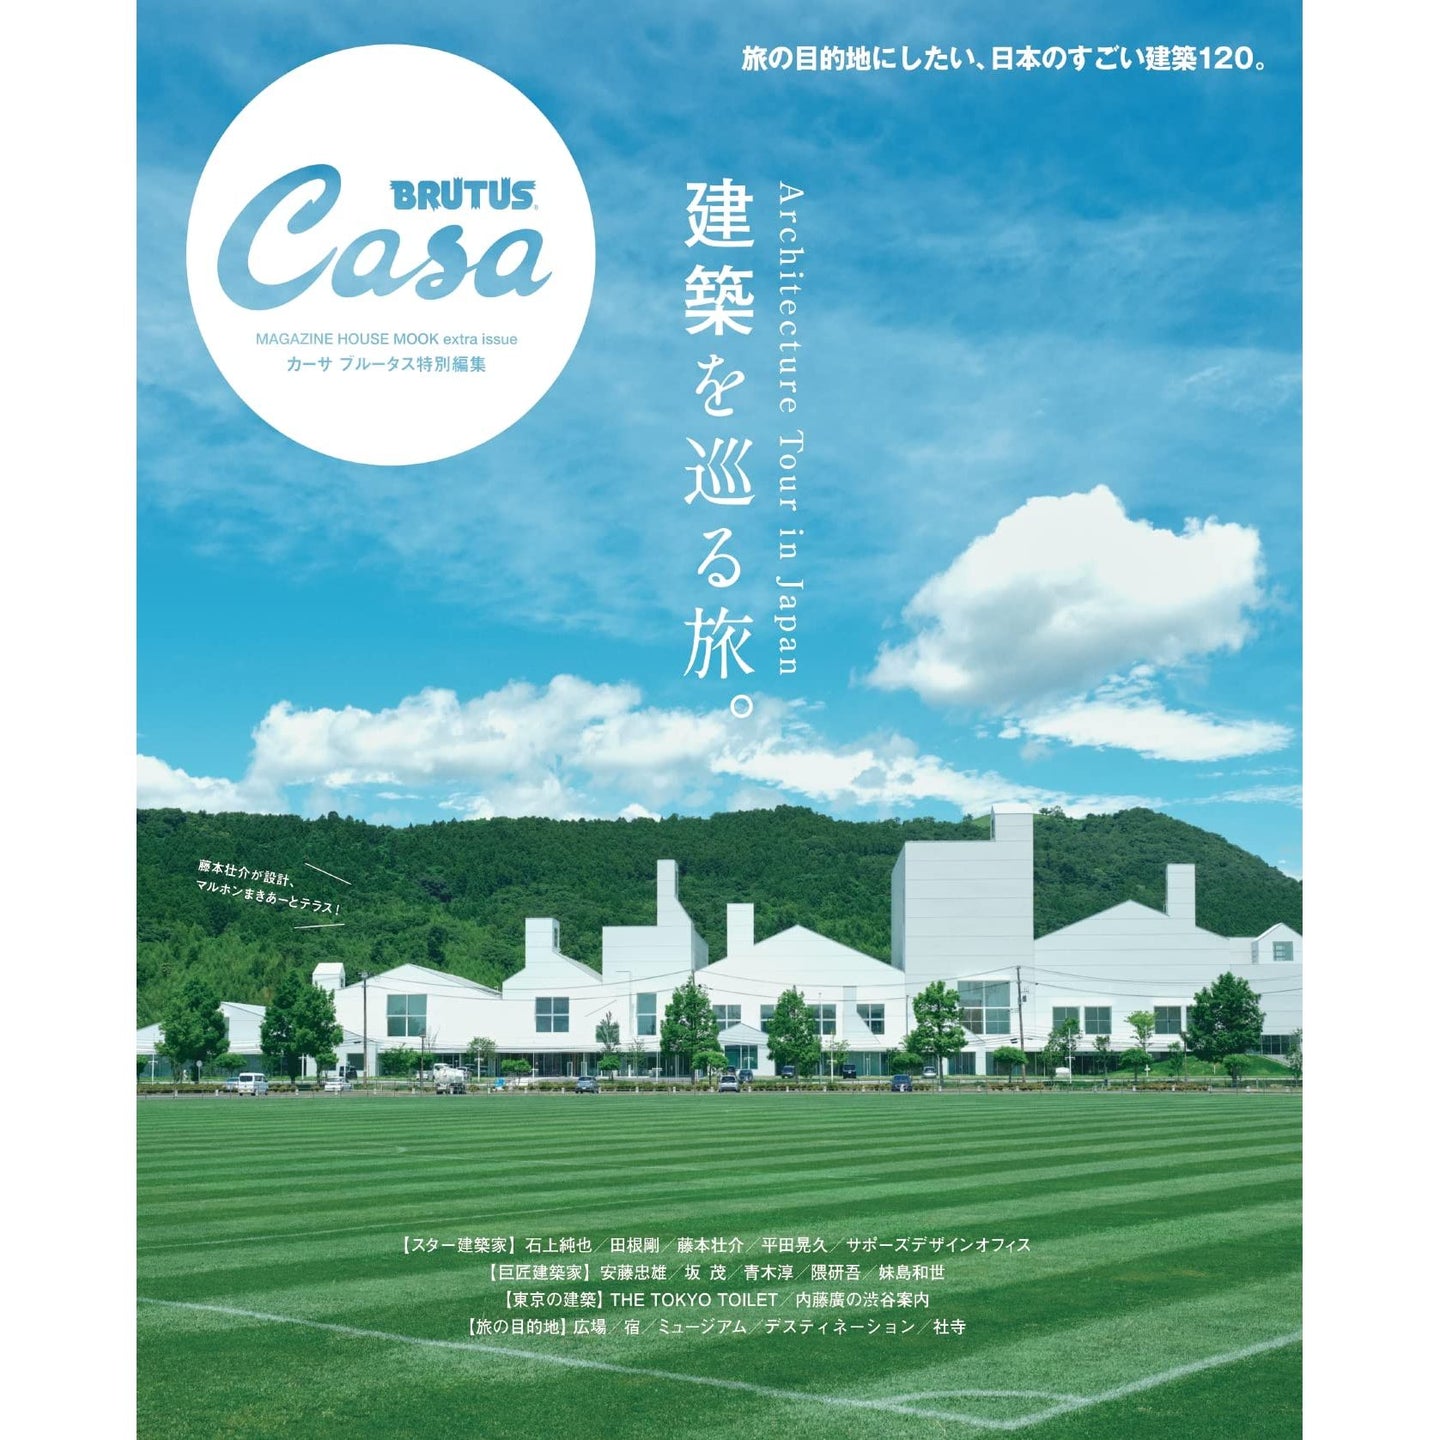 Casa BRUTUS Magazine Architecture Tour in Japan